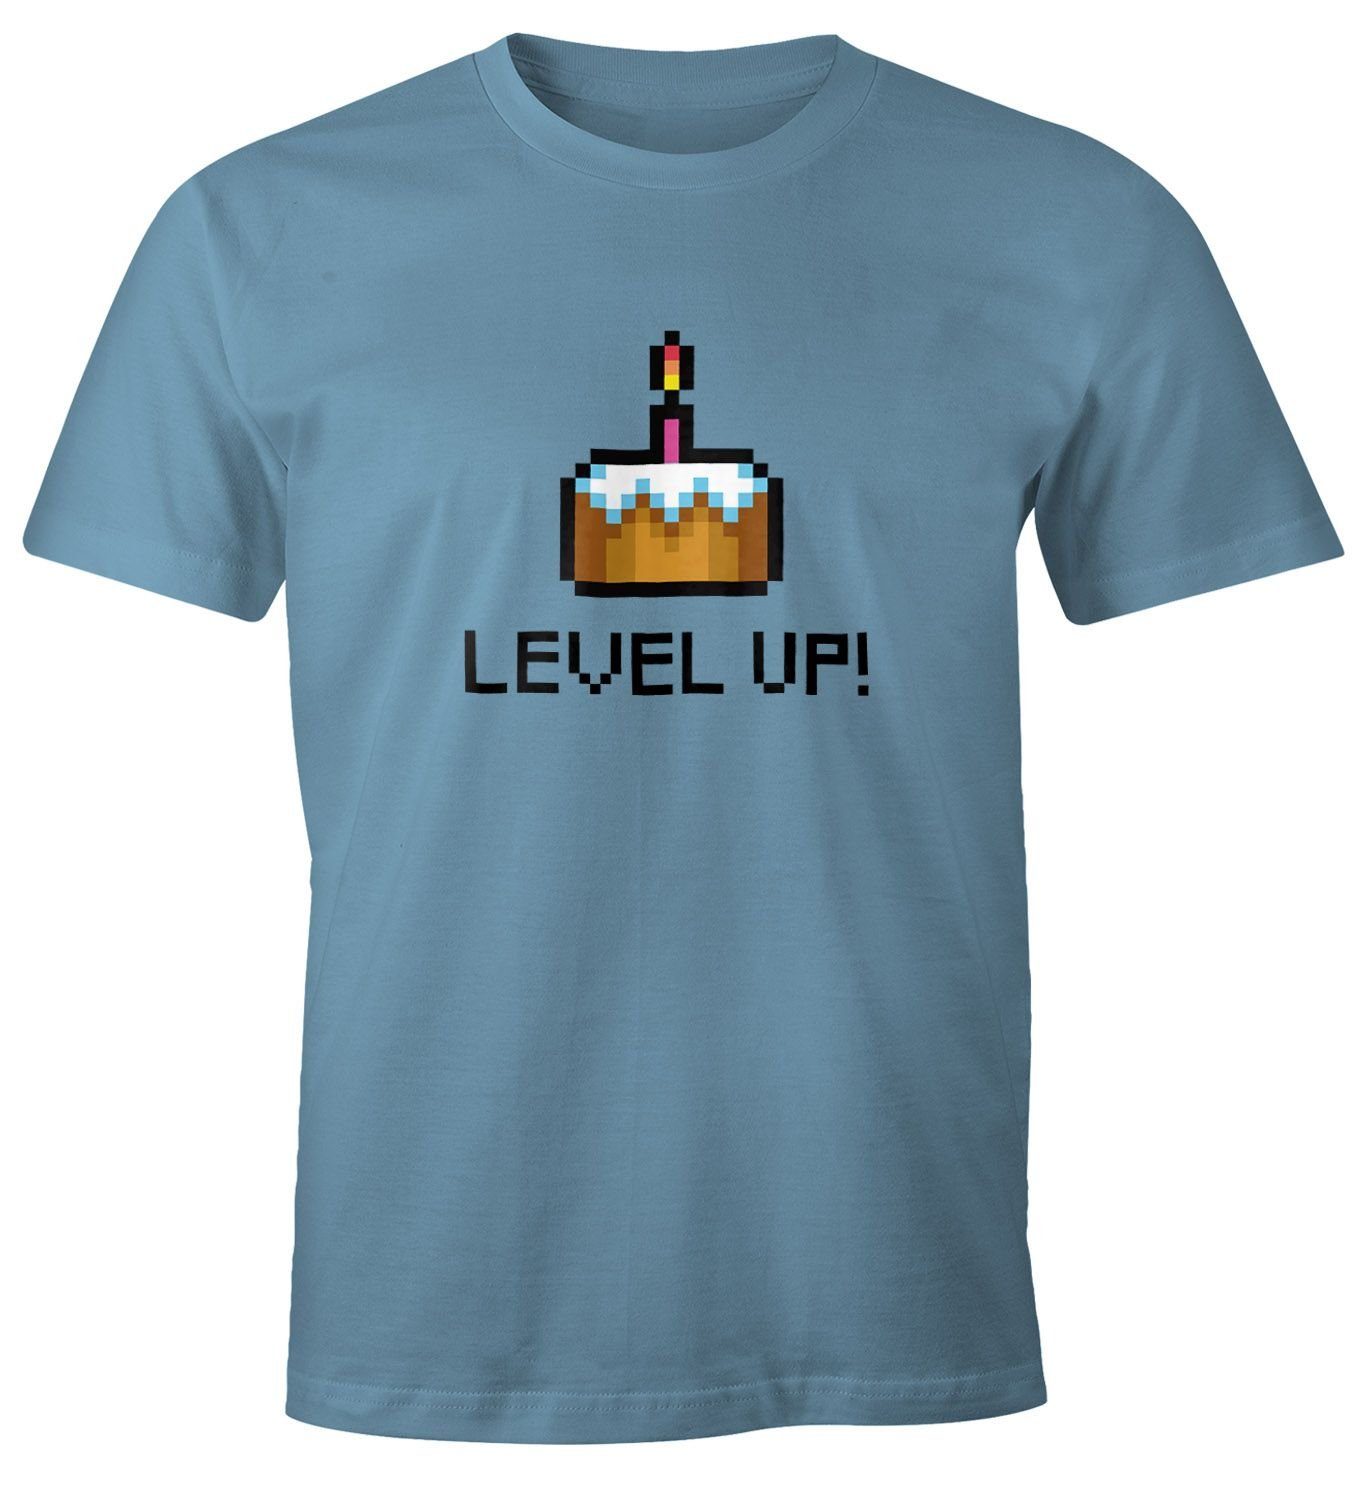 MoonWorks Print-Shirt Herren T-Shirt Geburtstag Level Up Pixel-Torte Retro Gamer Pixelgrafik Geschenk Arcade Fun-Shirt Moonworks® mit Print blau